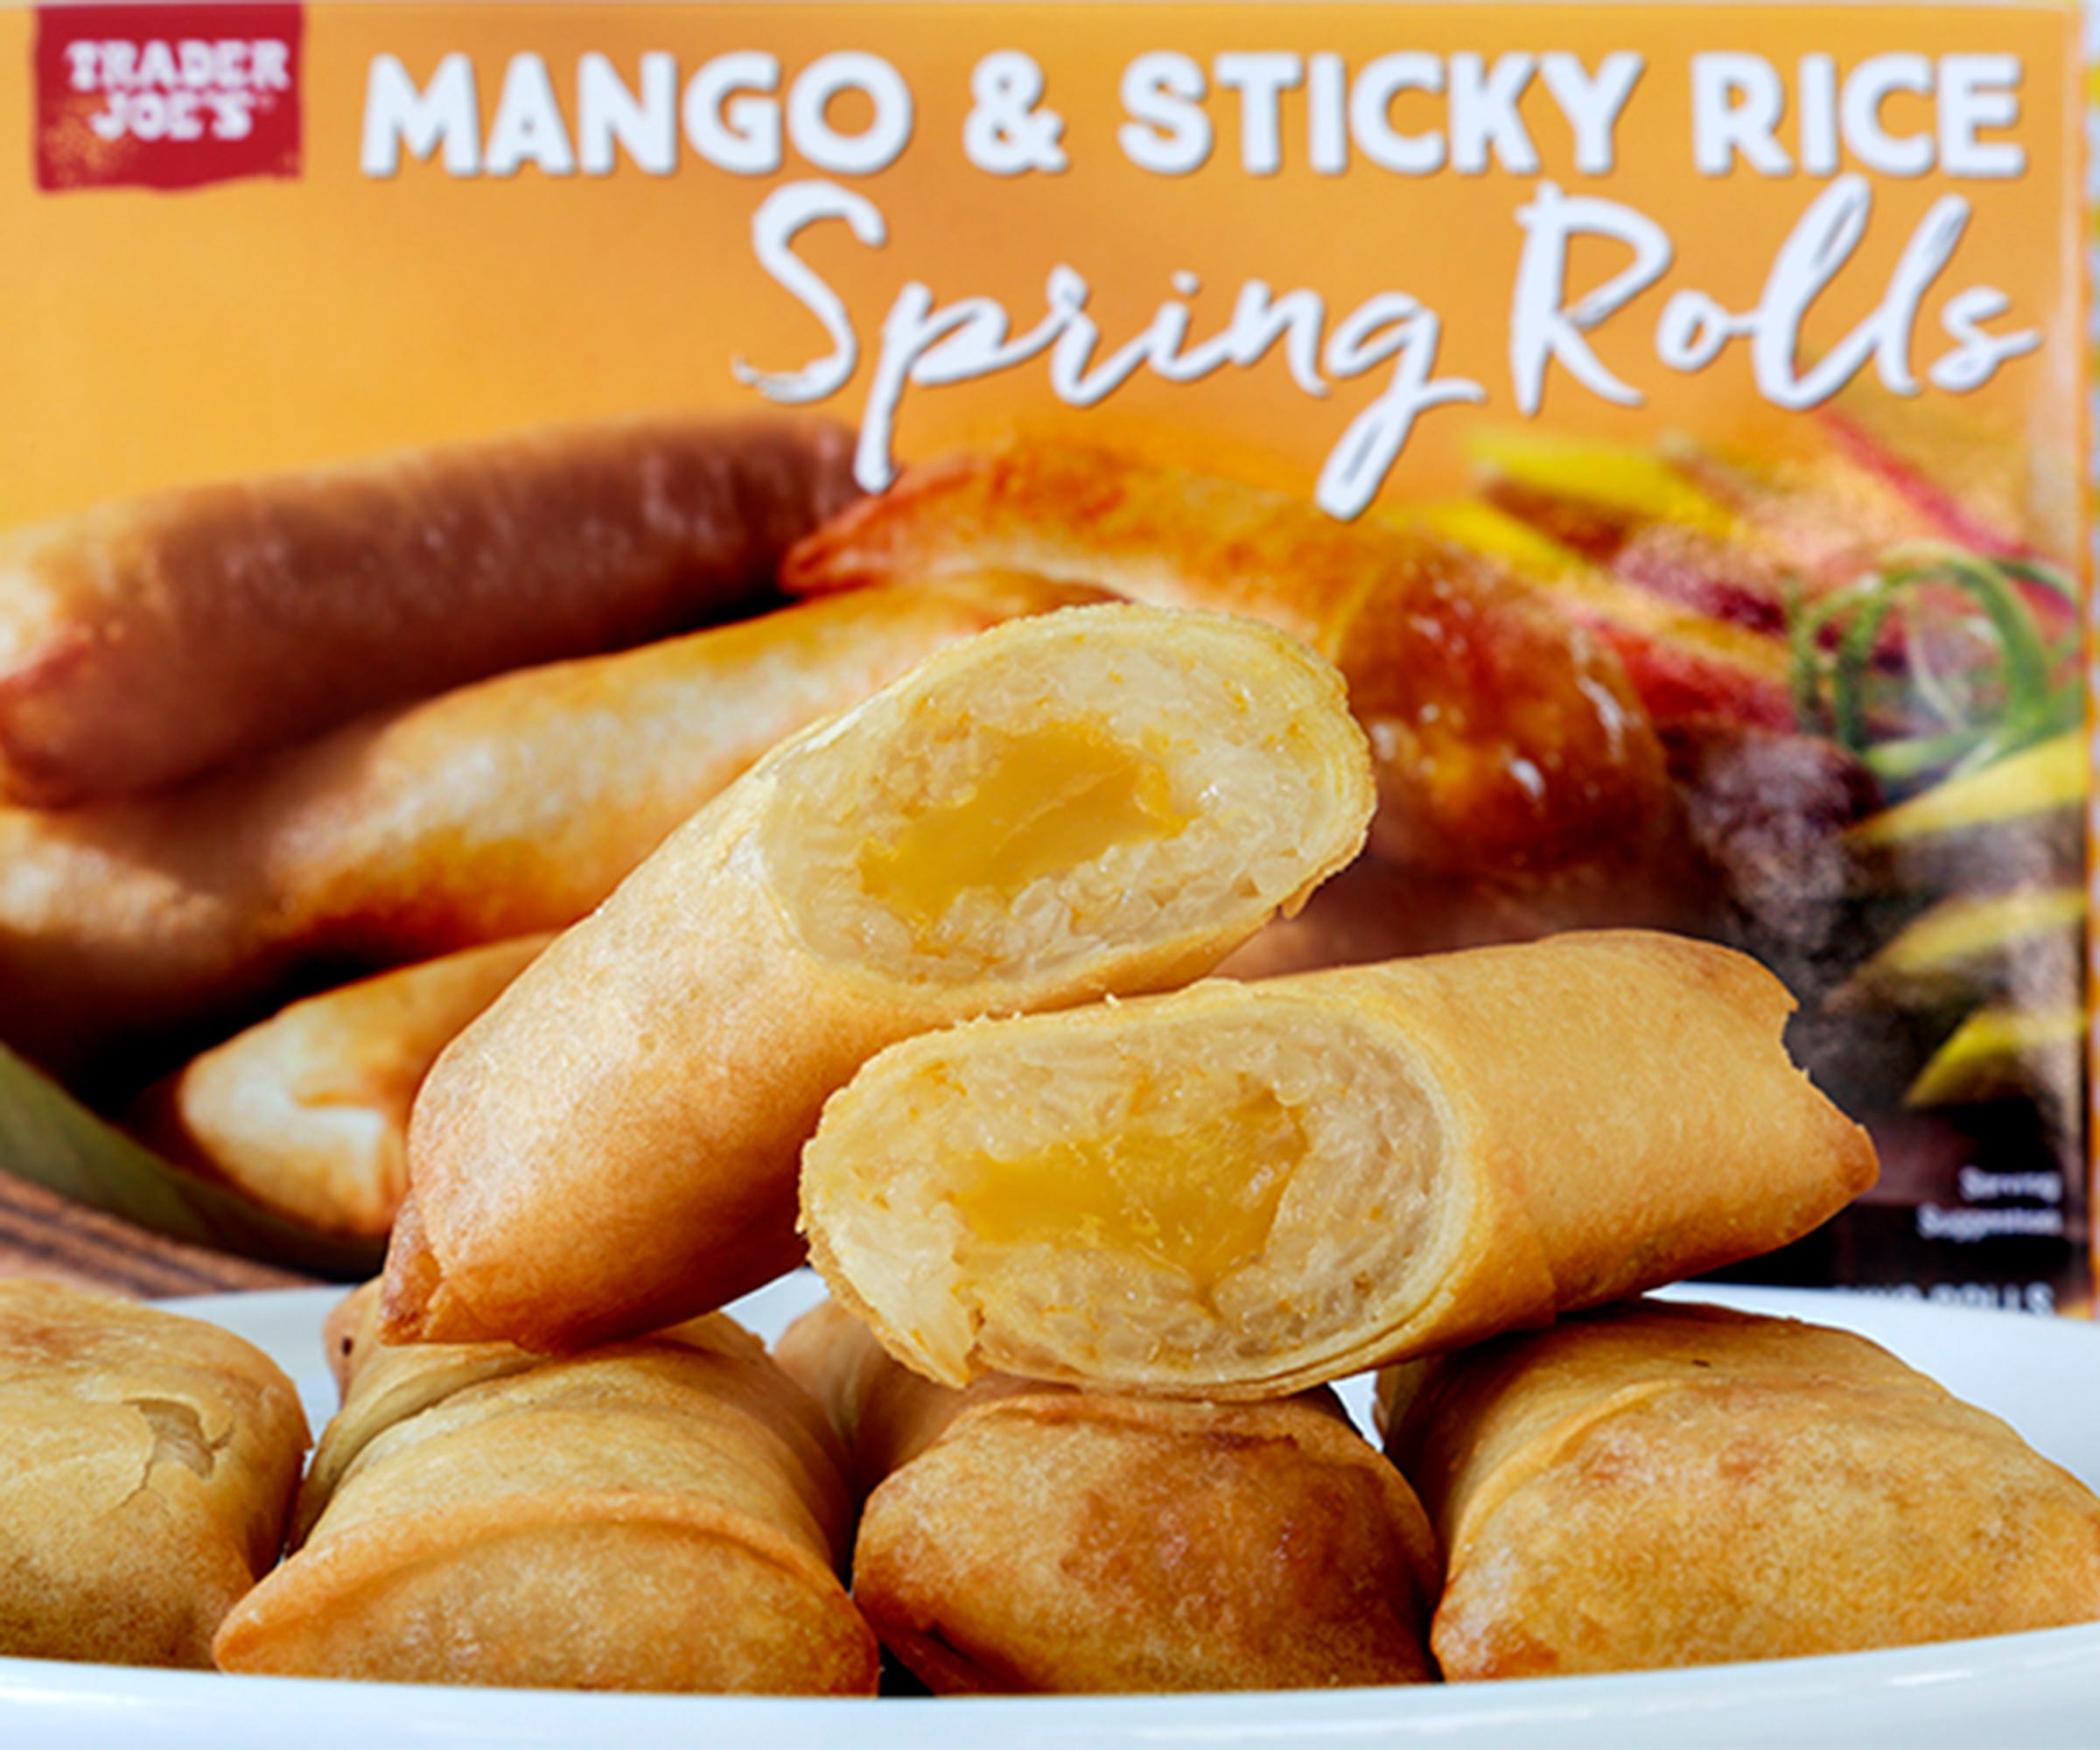 Mango & Sticky Rice Spring Rolls